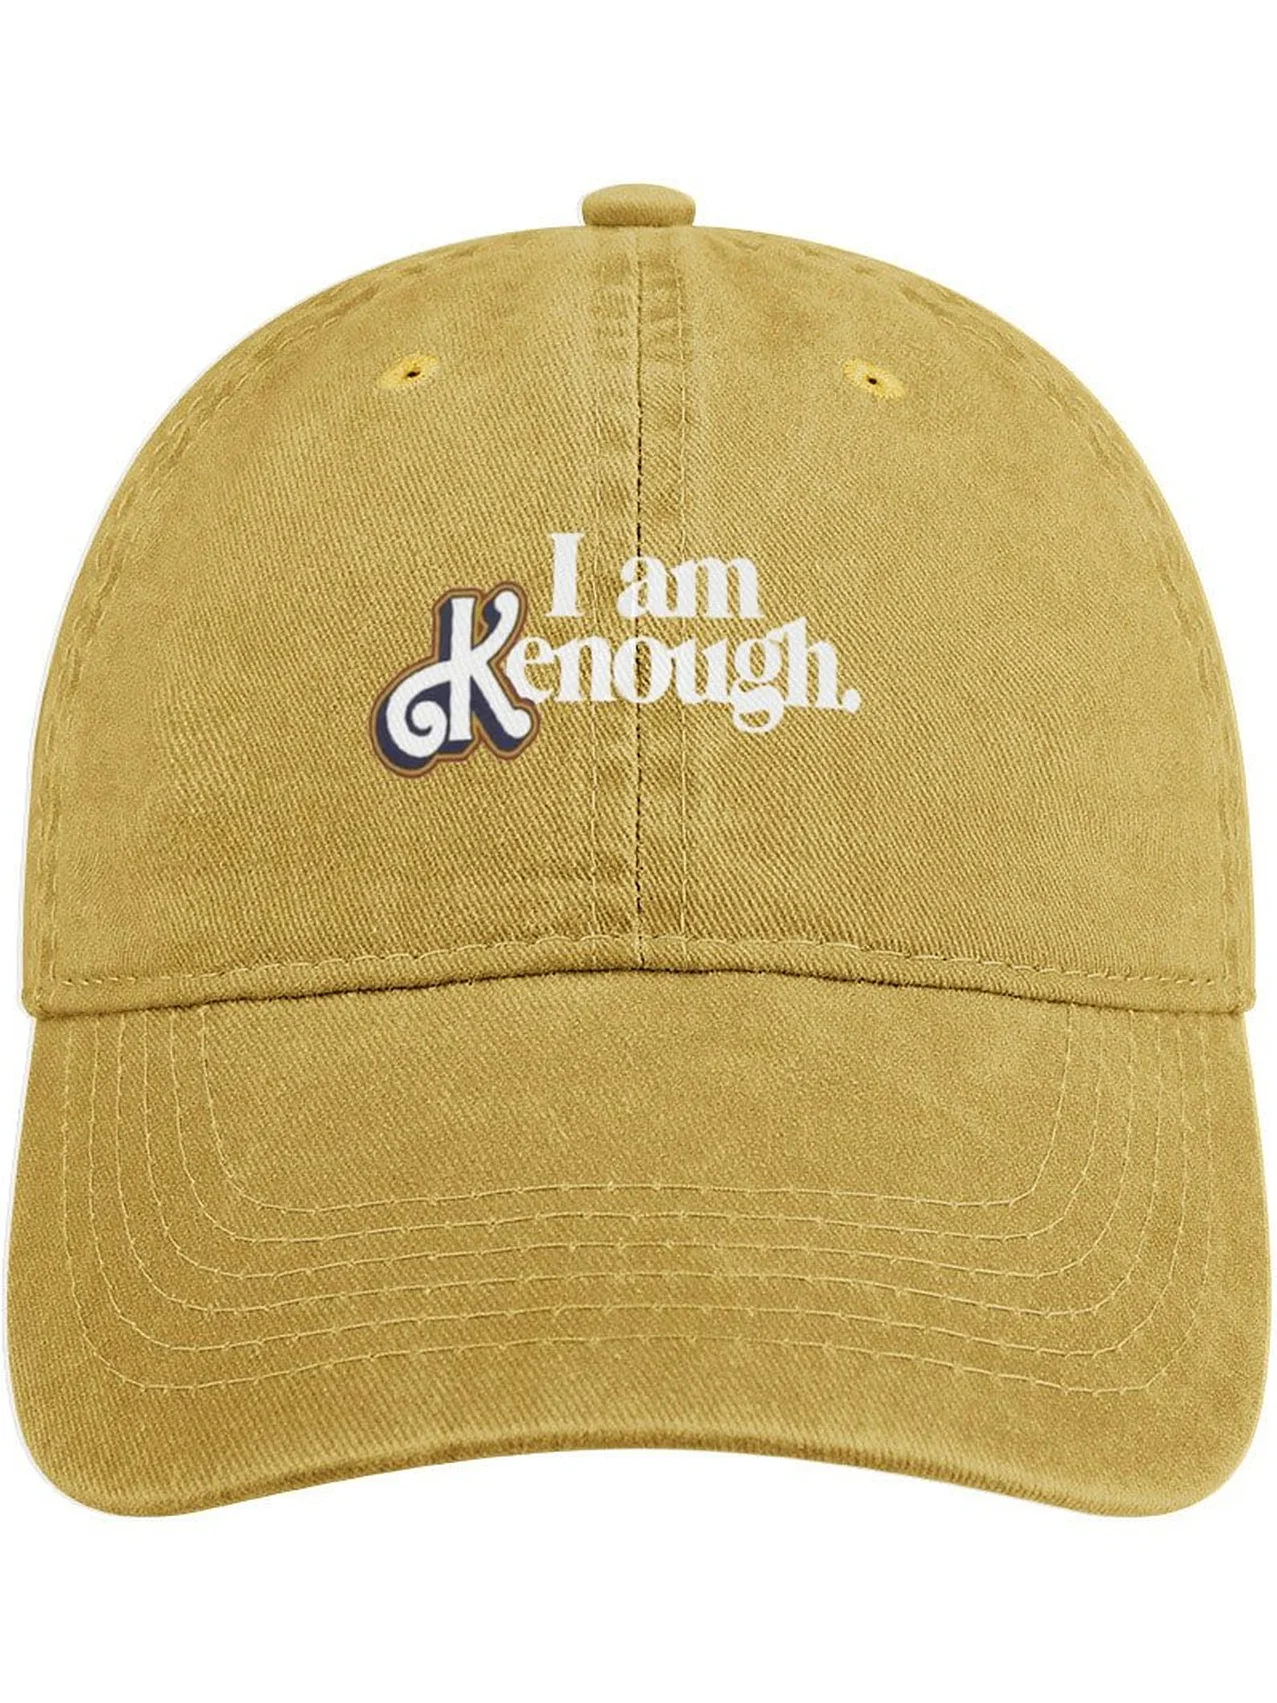 Men's /Women's I'M Kenough  Denim Hat